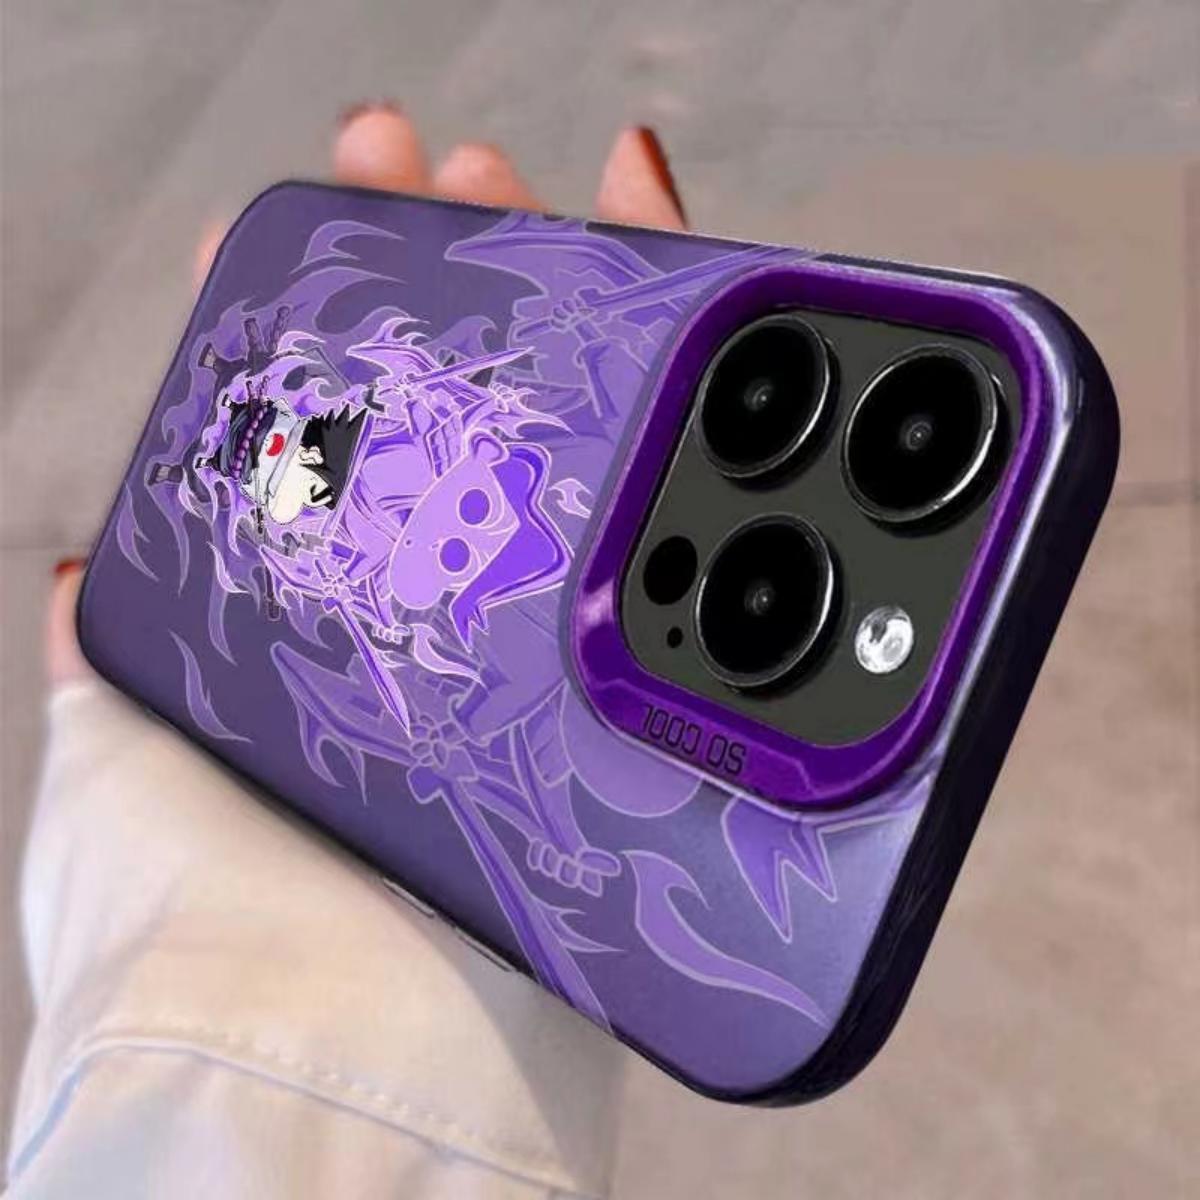 Unique new kakashi style trend cool phone case.